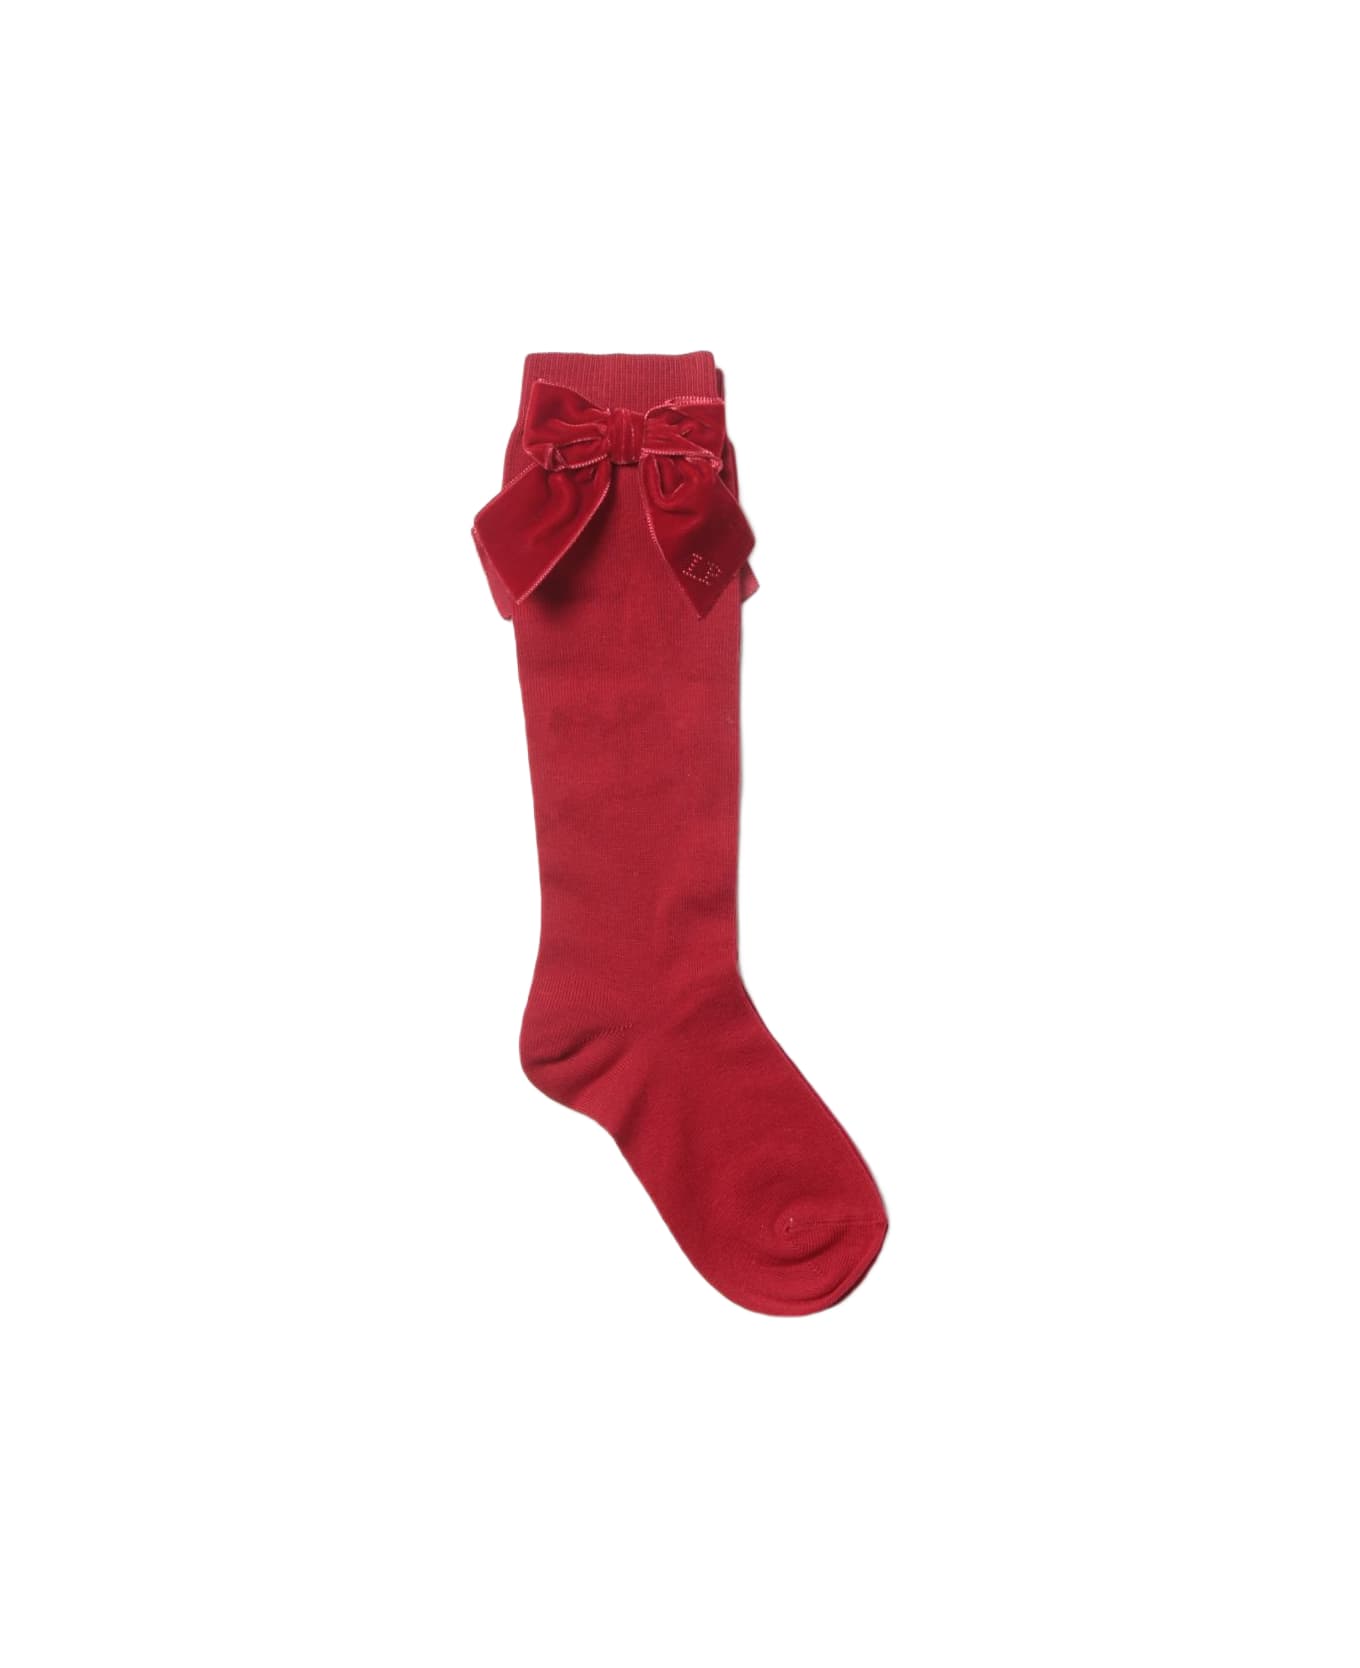 La Perla Socks With Bow - Red